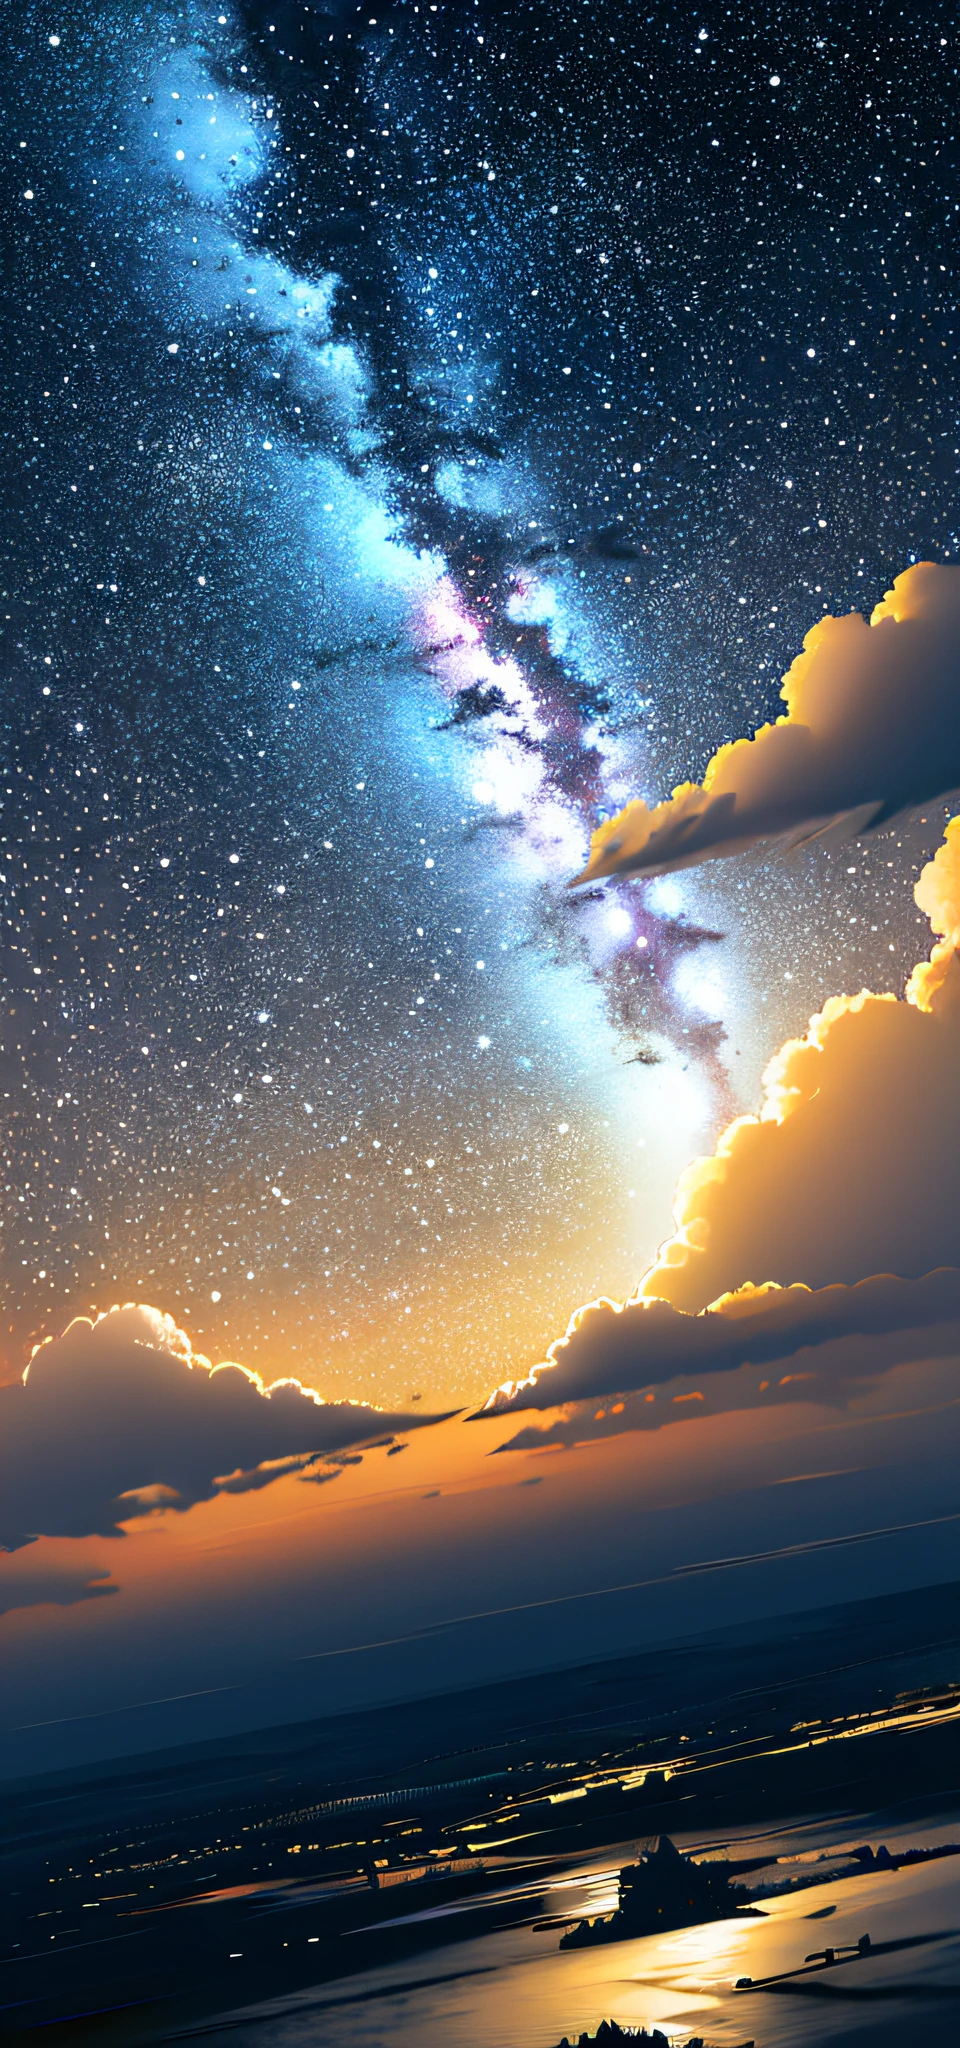 octane，Skysky，As estrelas（Skysky），scenecy，starrysky，the night，nigh sky，solo，exteriors，​​clouds，galactic，silhouettes